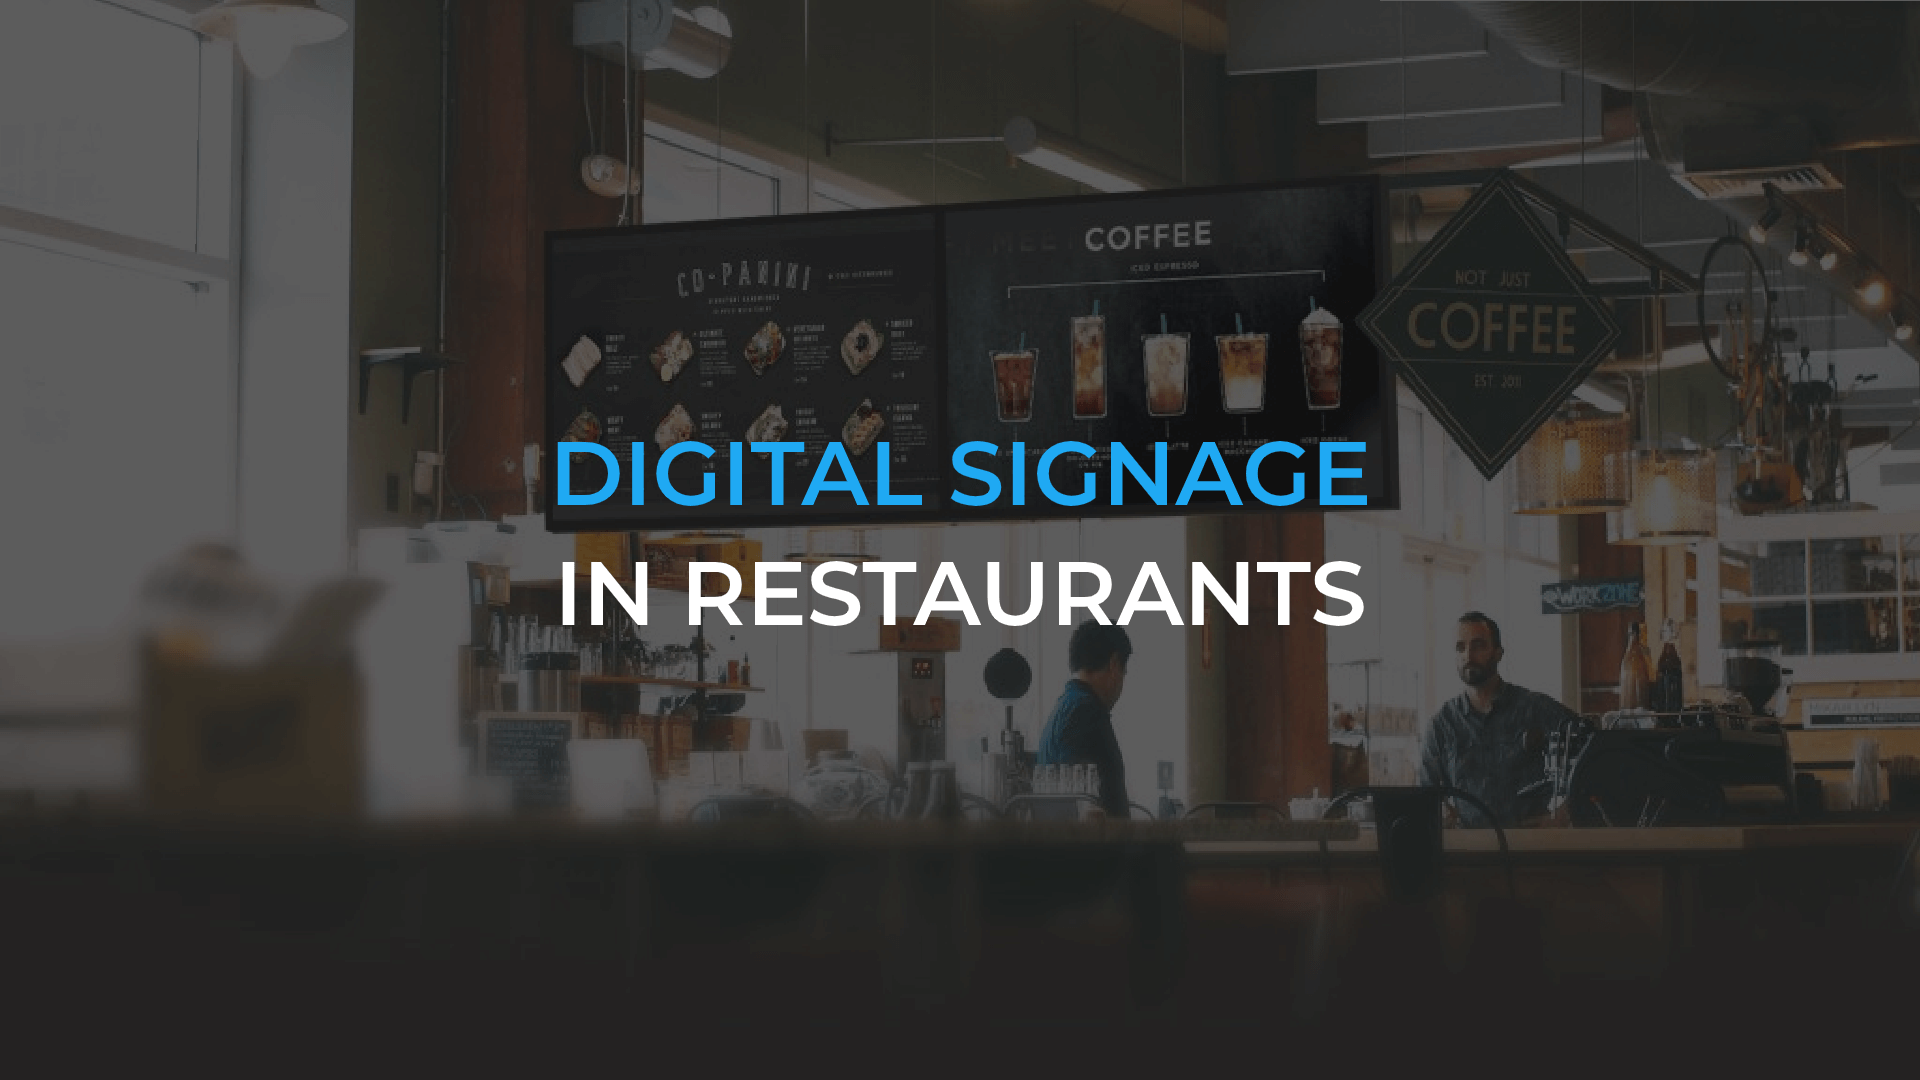 Digital signage in restaurants